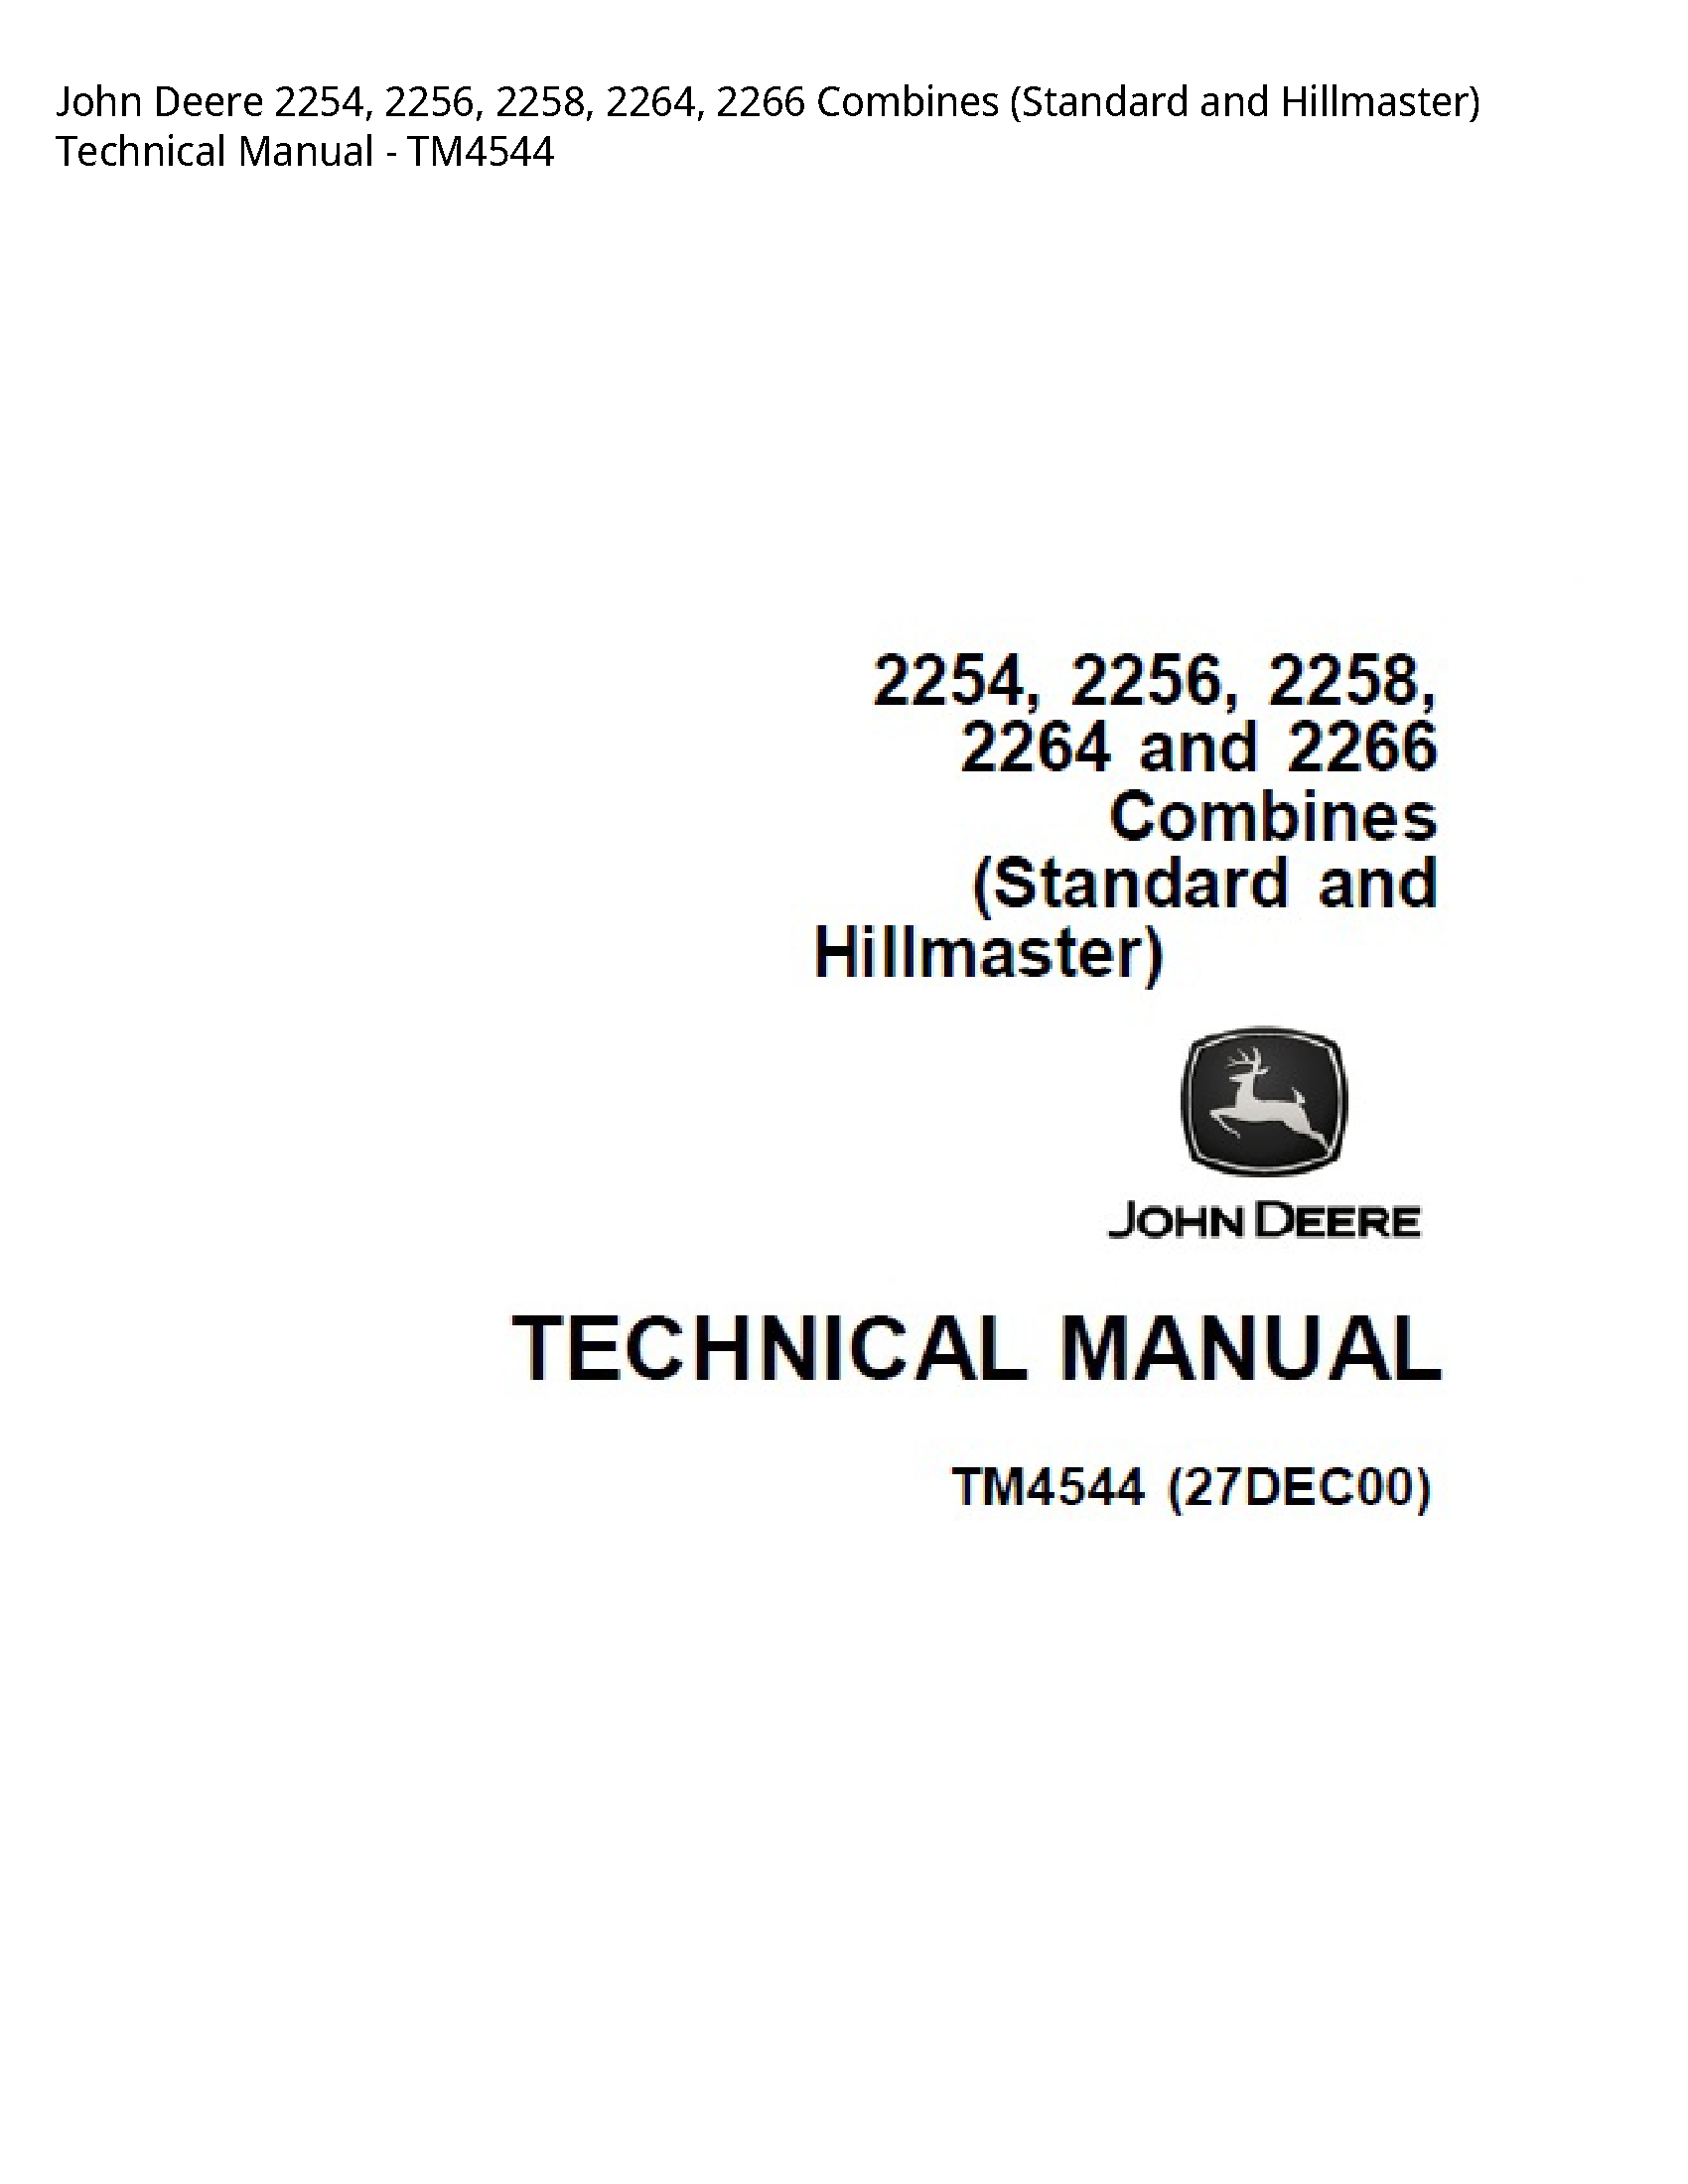 John Deere 2254 Combines Standard  Hillmaster Technical manual